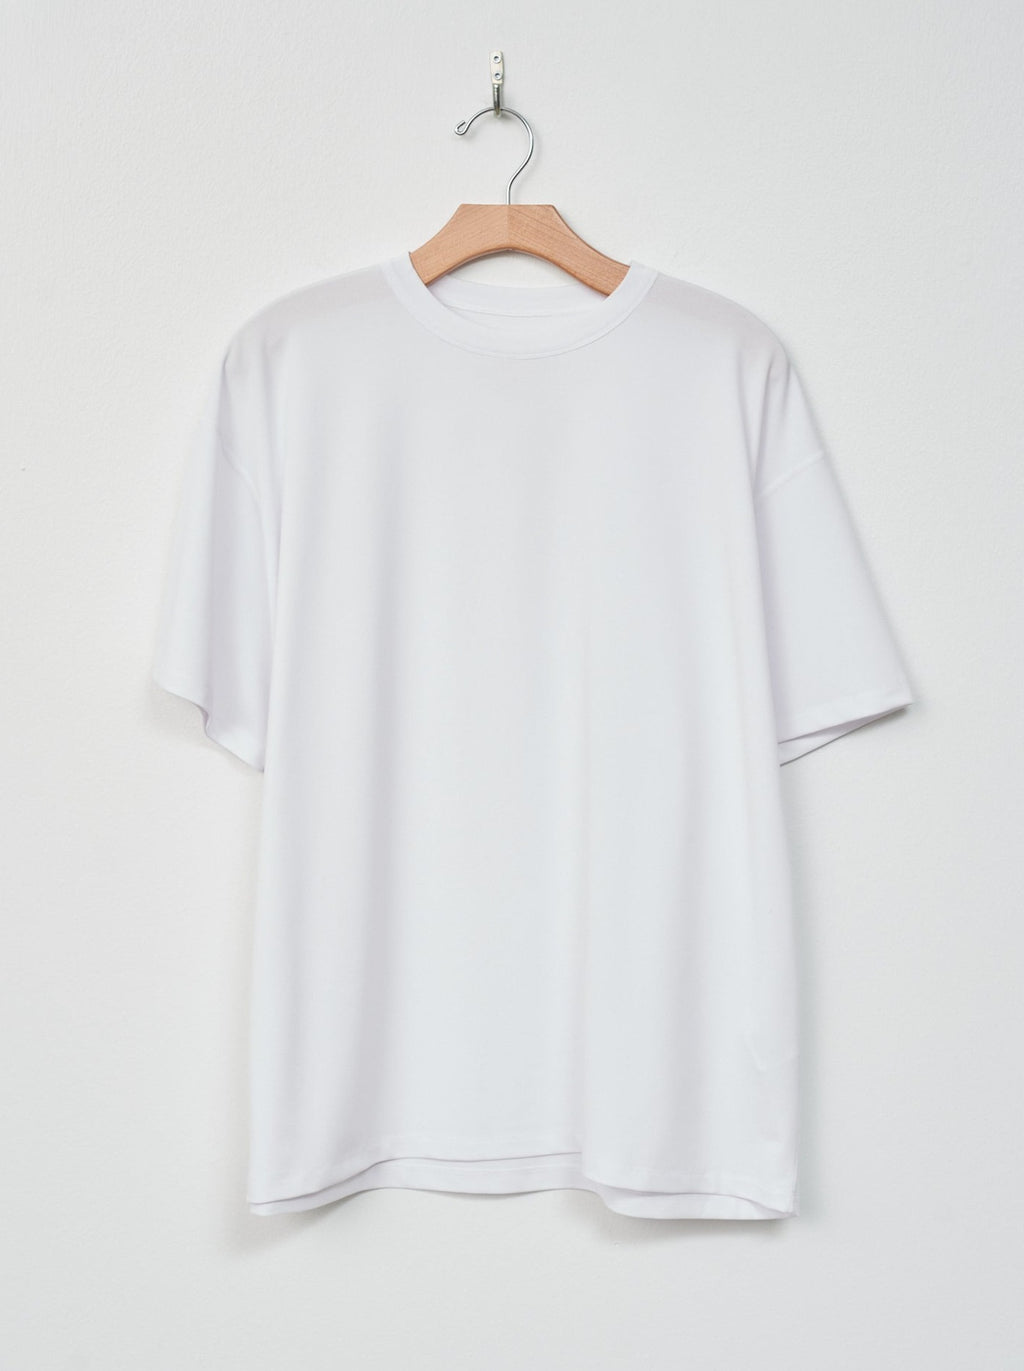 Namu Shop - Yoko Sakamoto Standard T-Shirt - White